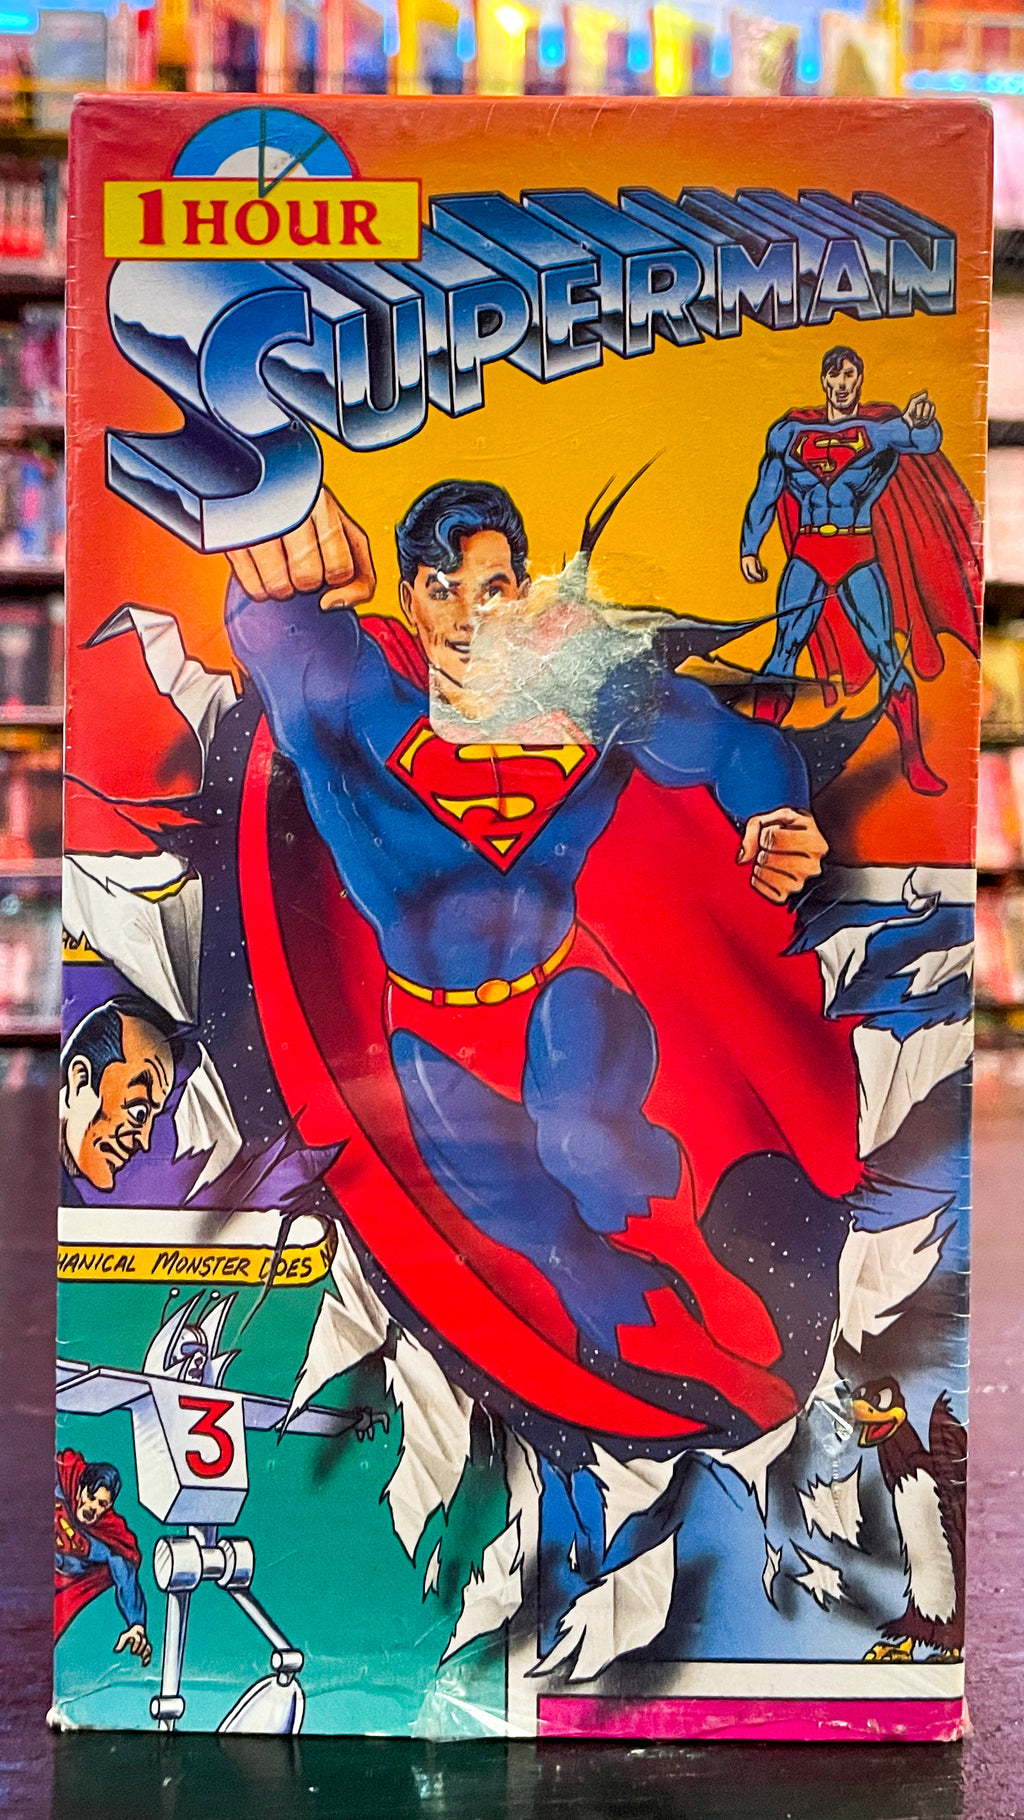 Superman Cartoon Favorites VHS